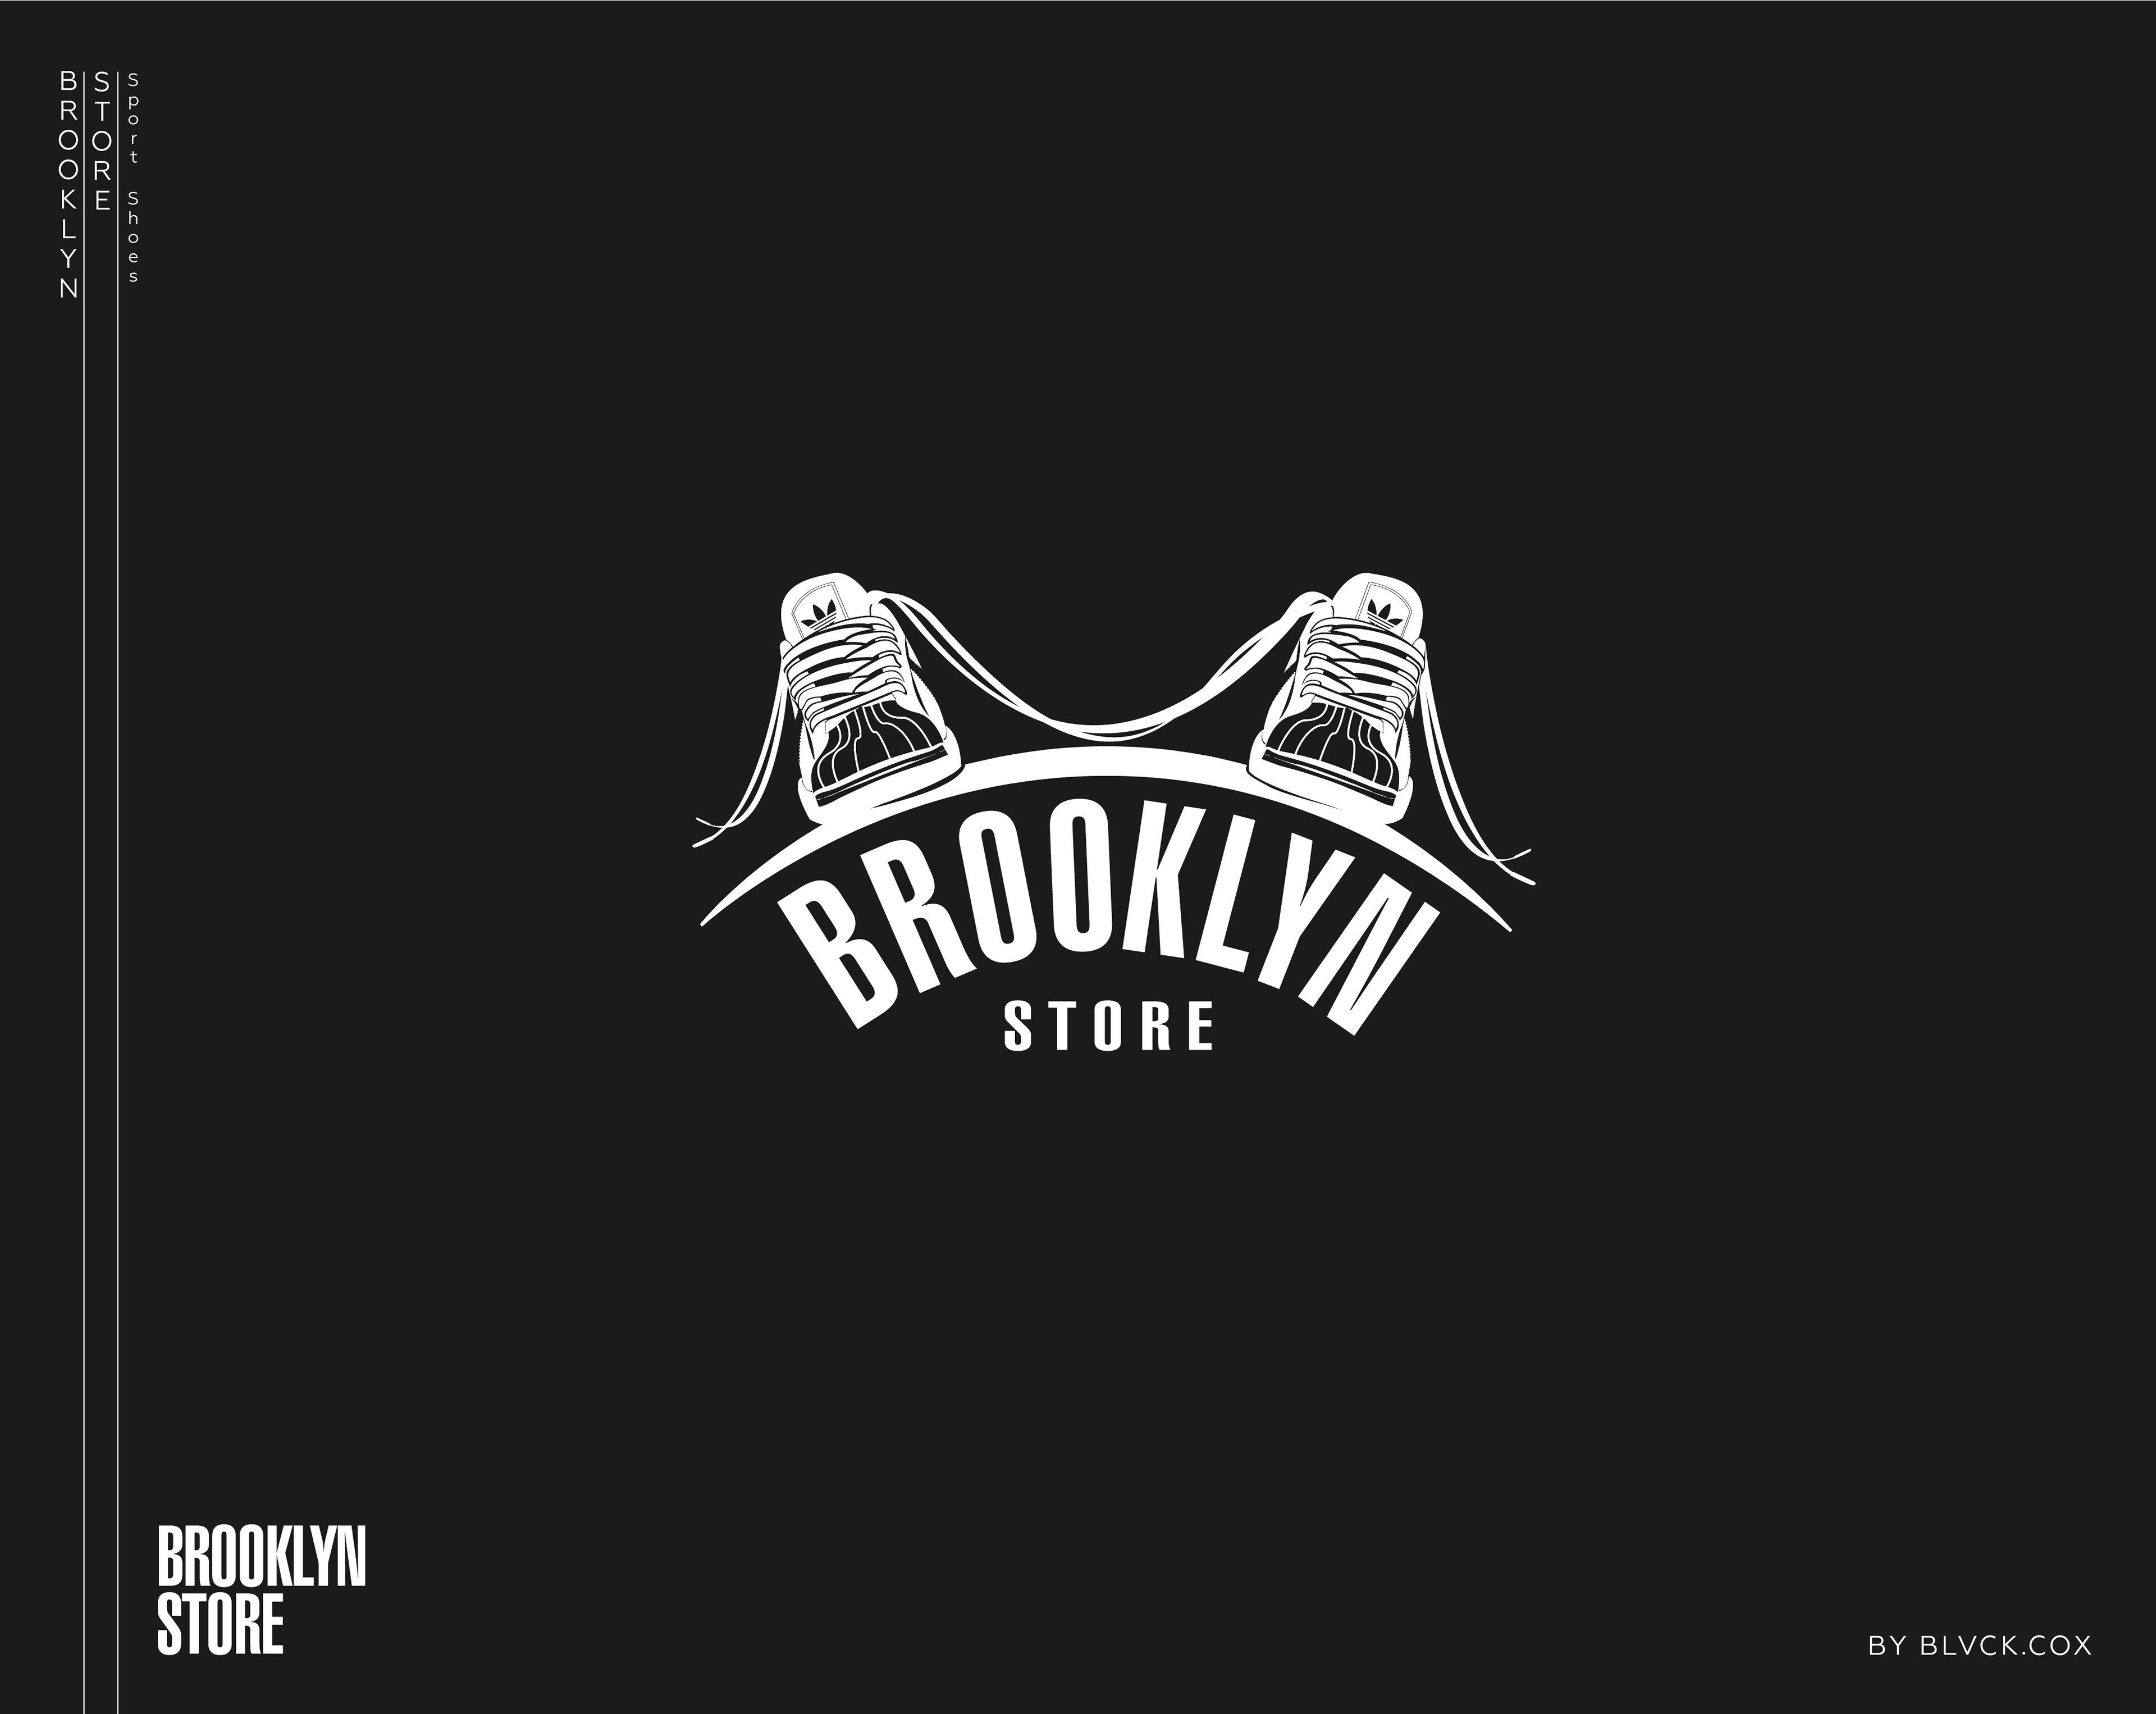 Brooklyn Logo - B L V C K . C O X - d e s i g n - Logo *Brooklyn Store